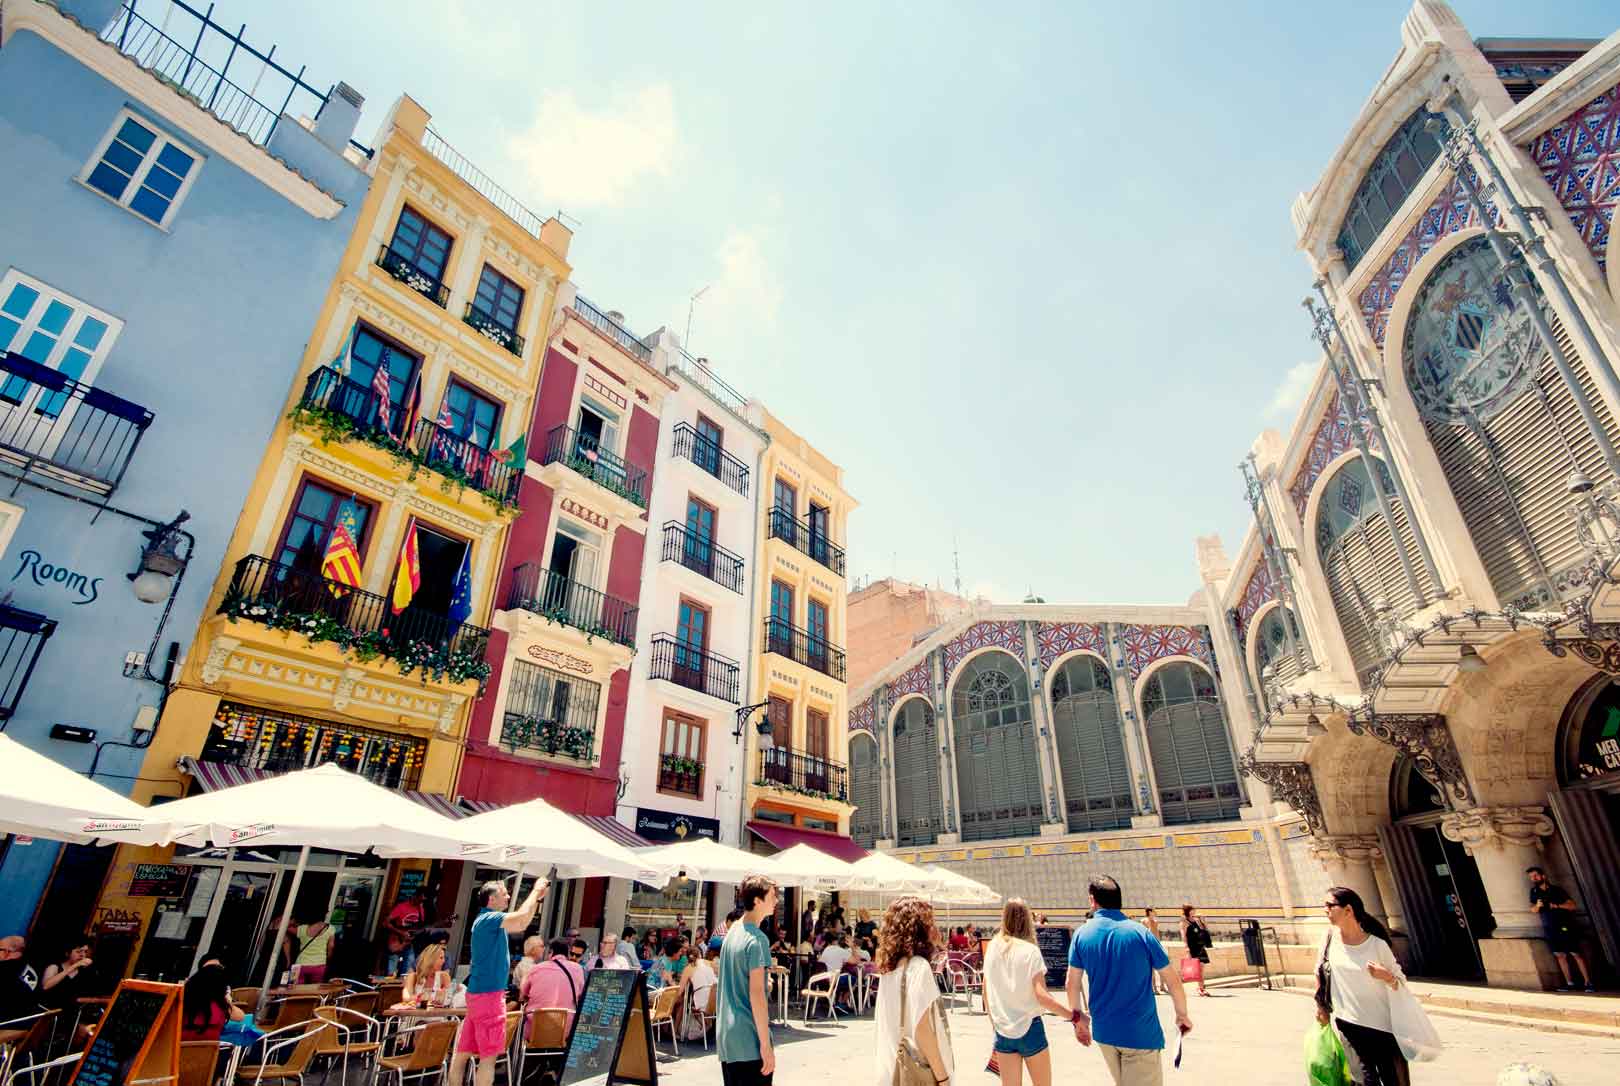 Visit city center of Valencia